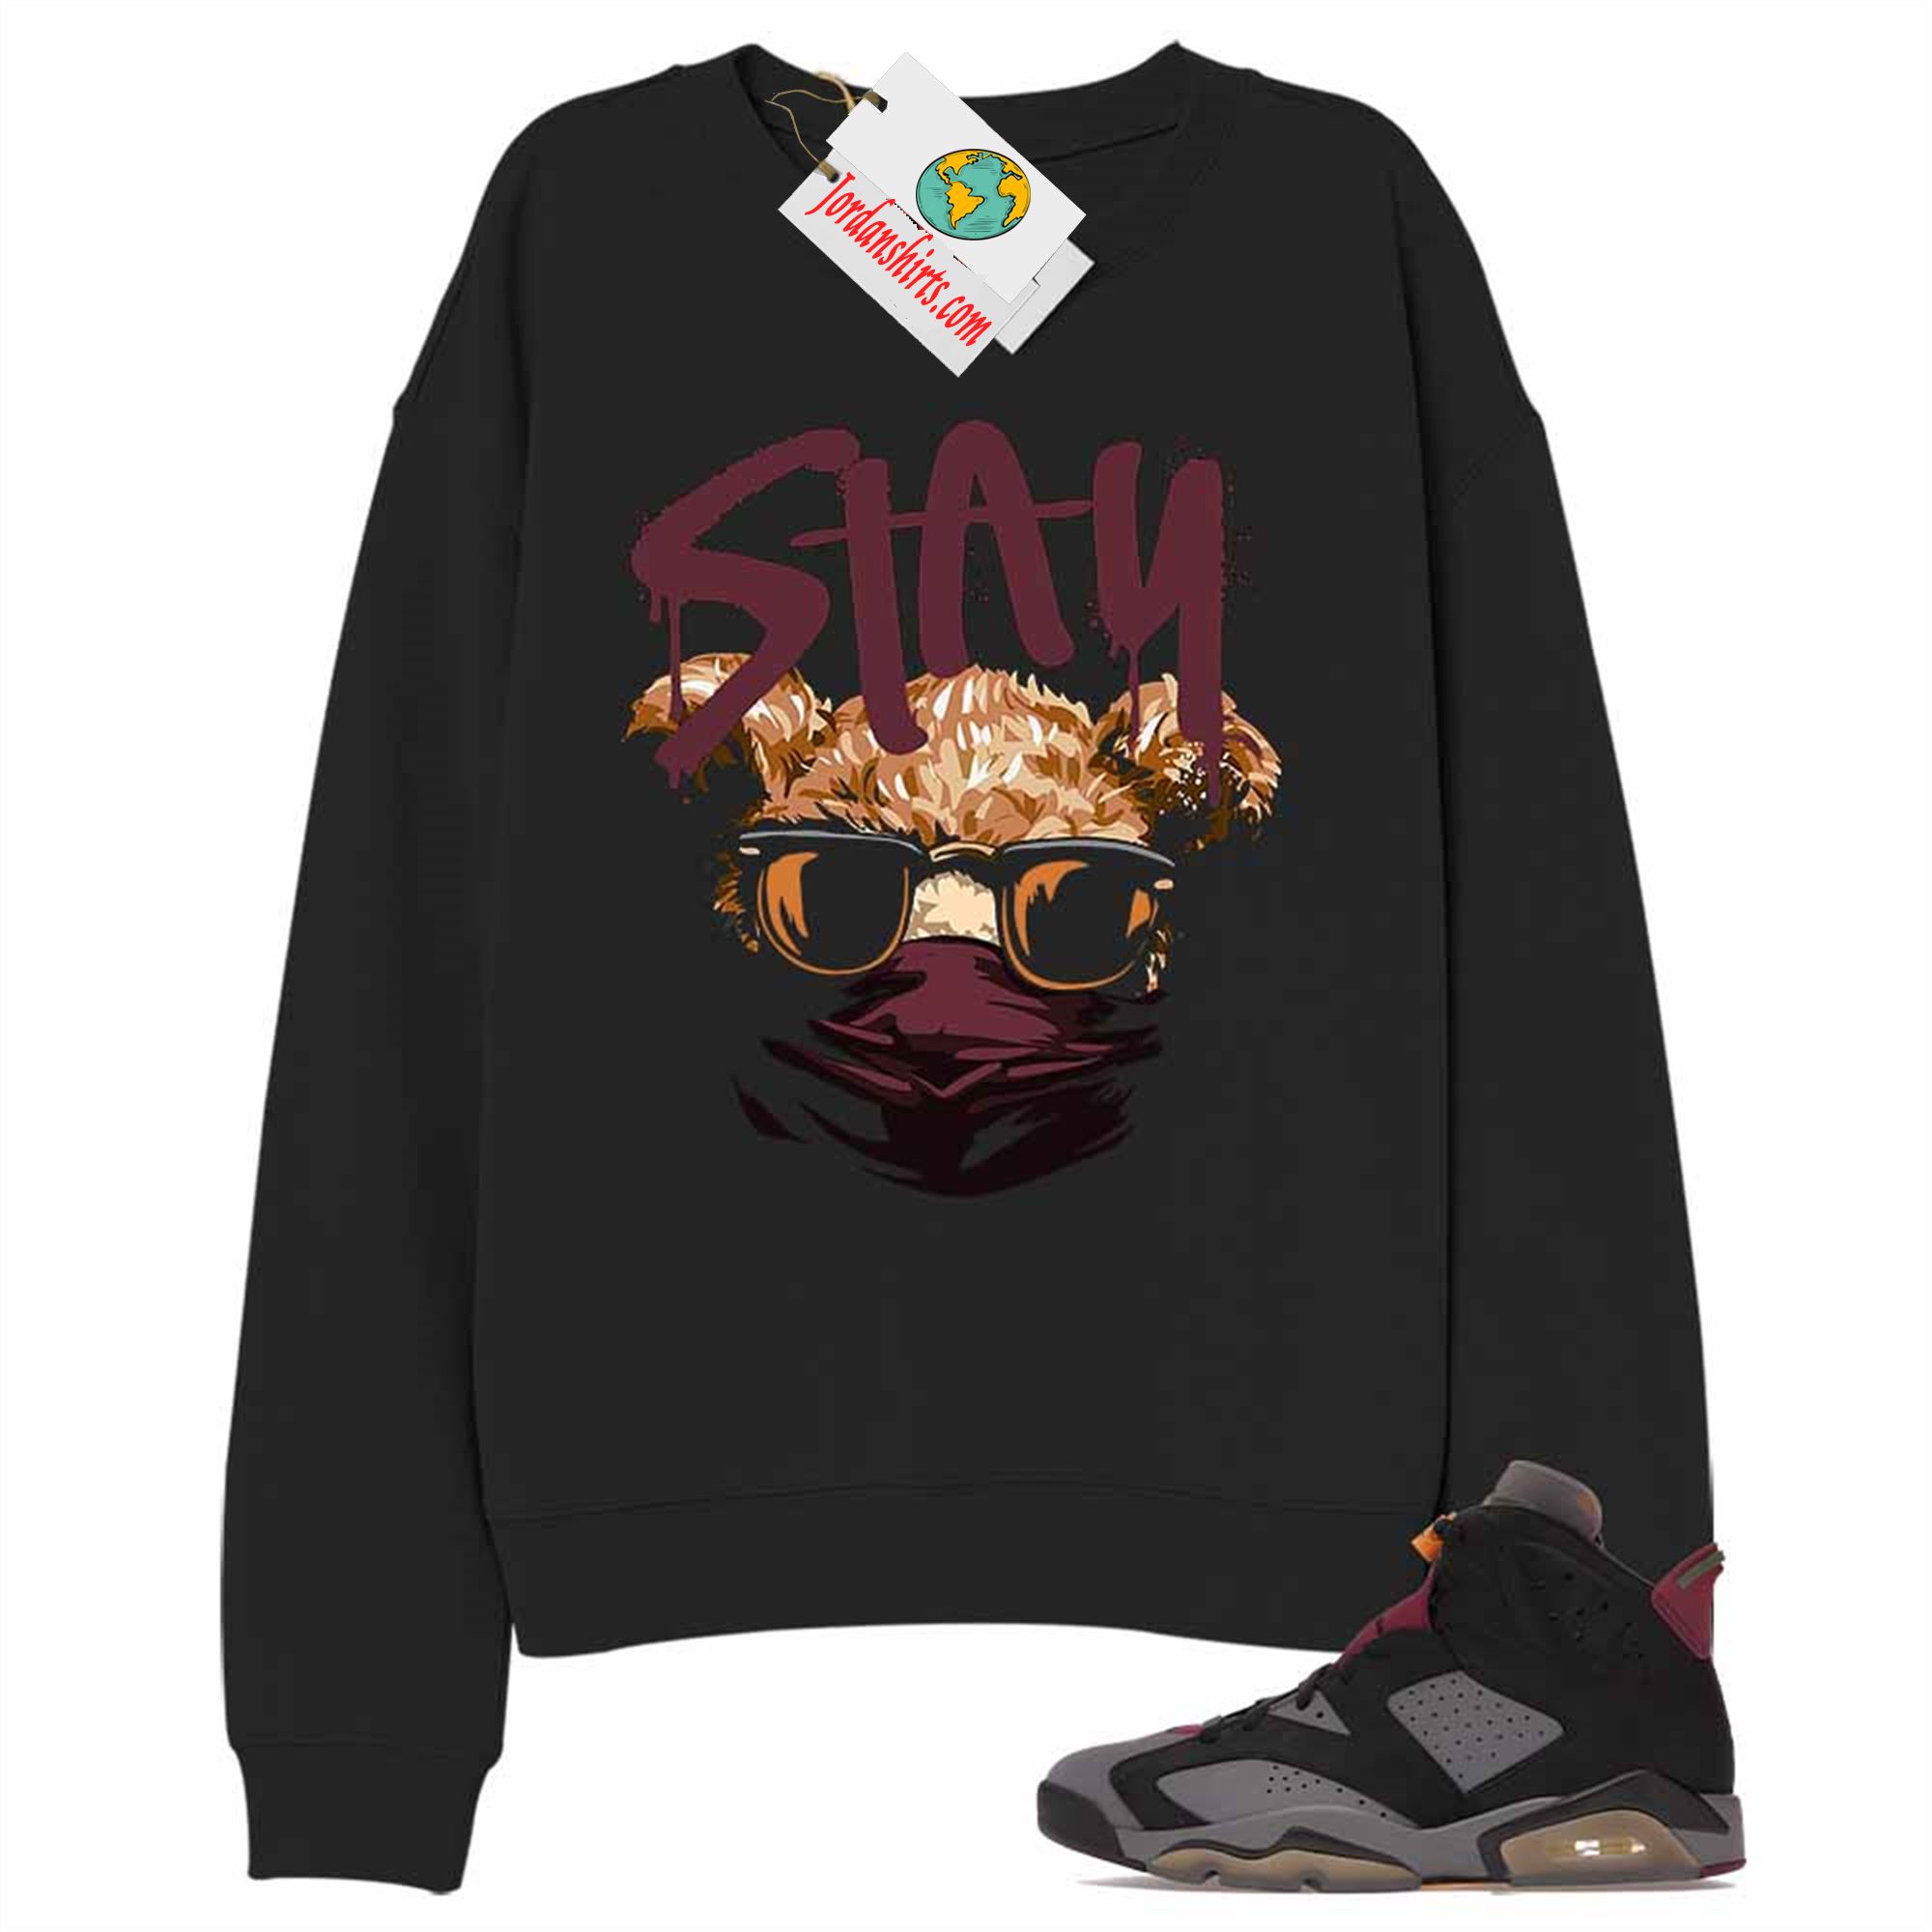 Jordan 6 Sweatshirt, Teddy Bear In Sunglasses _ Face Mask Black Sweatshirt Air Jordan 6 Bordeaux 6s Size Up To 5xl